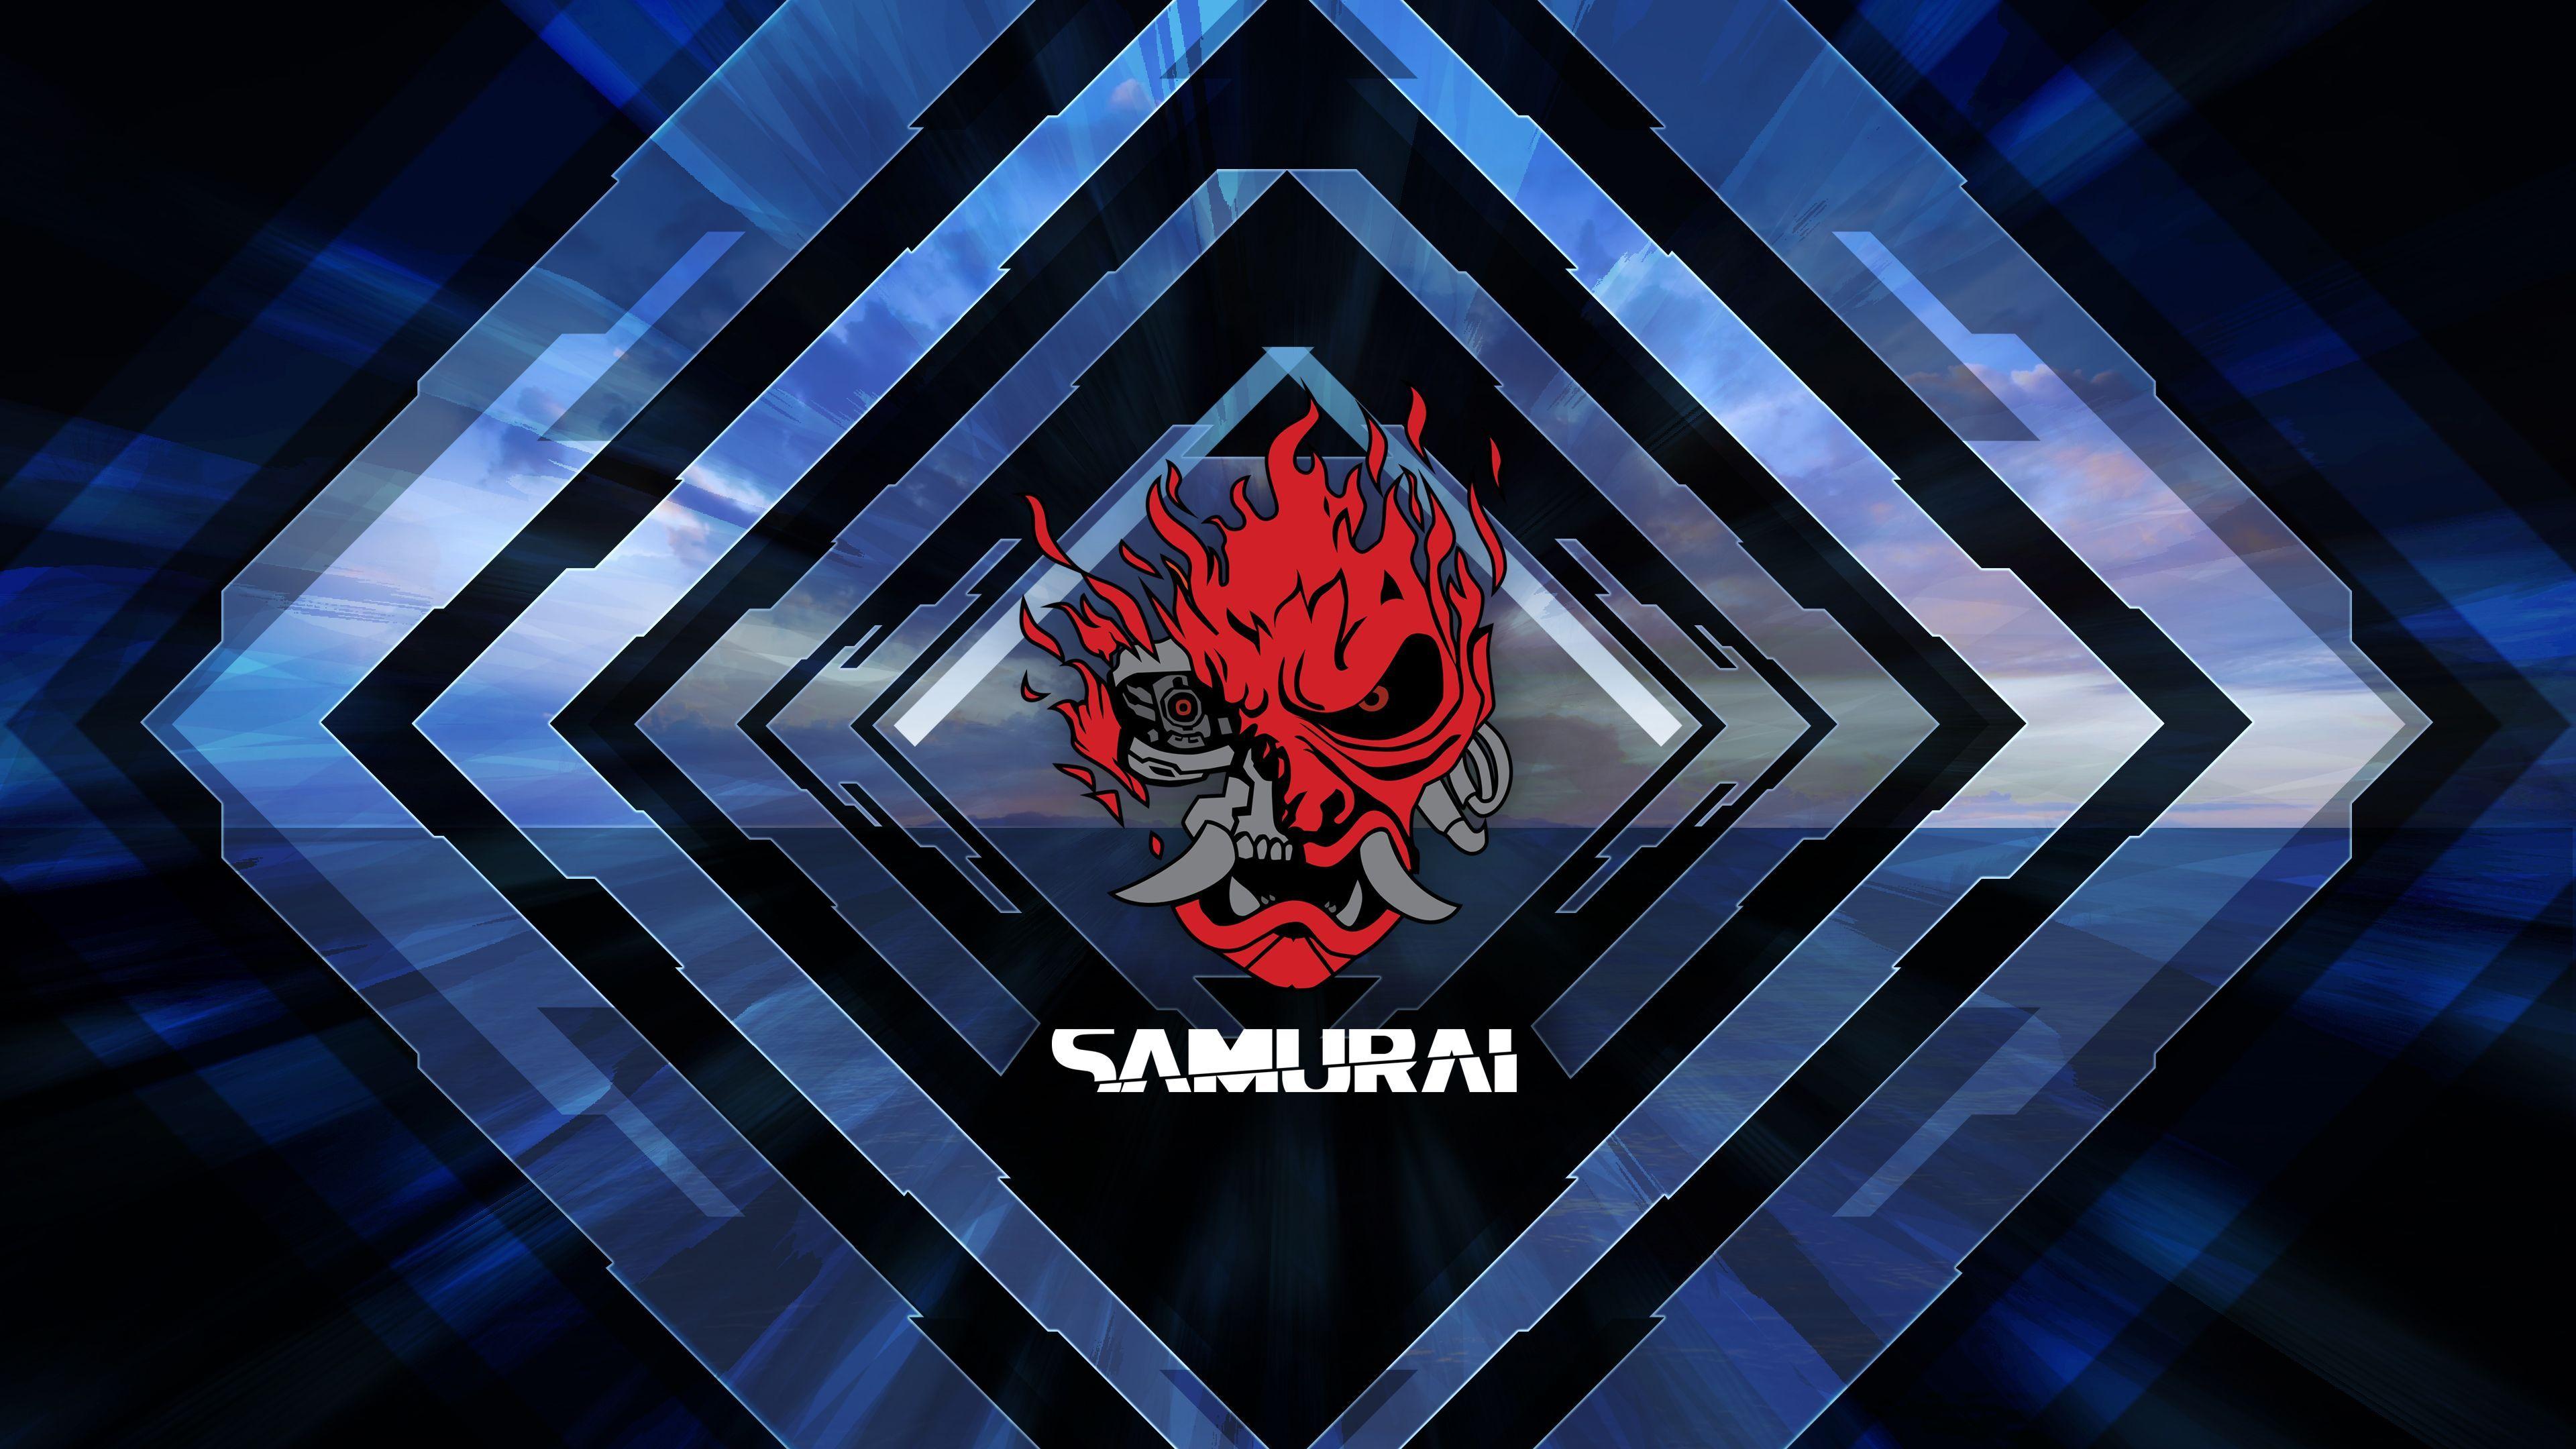 Cyberpunk Samurai Wallpapers - Top Free Cyberpunk Samurai Backgrounds